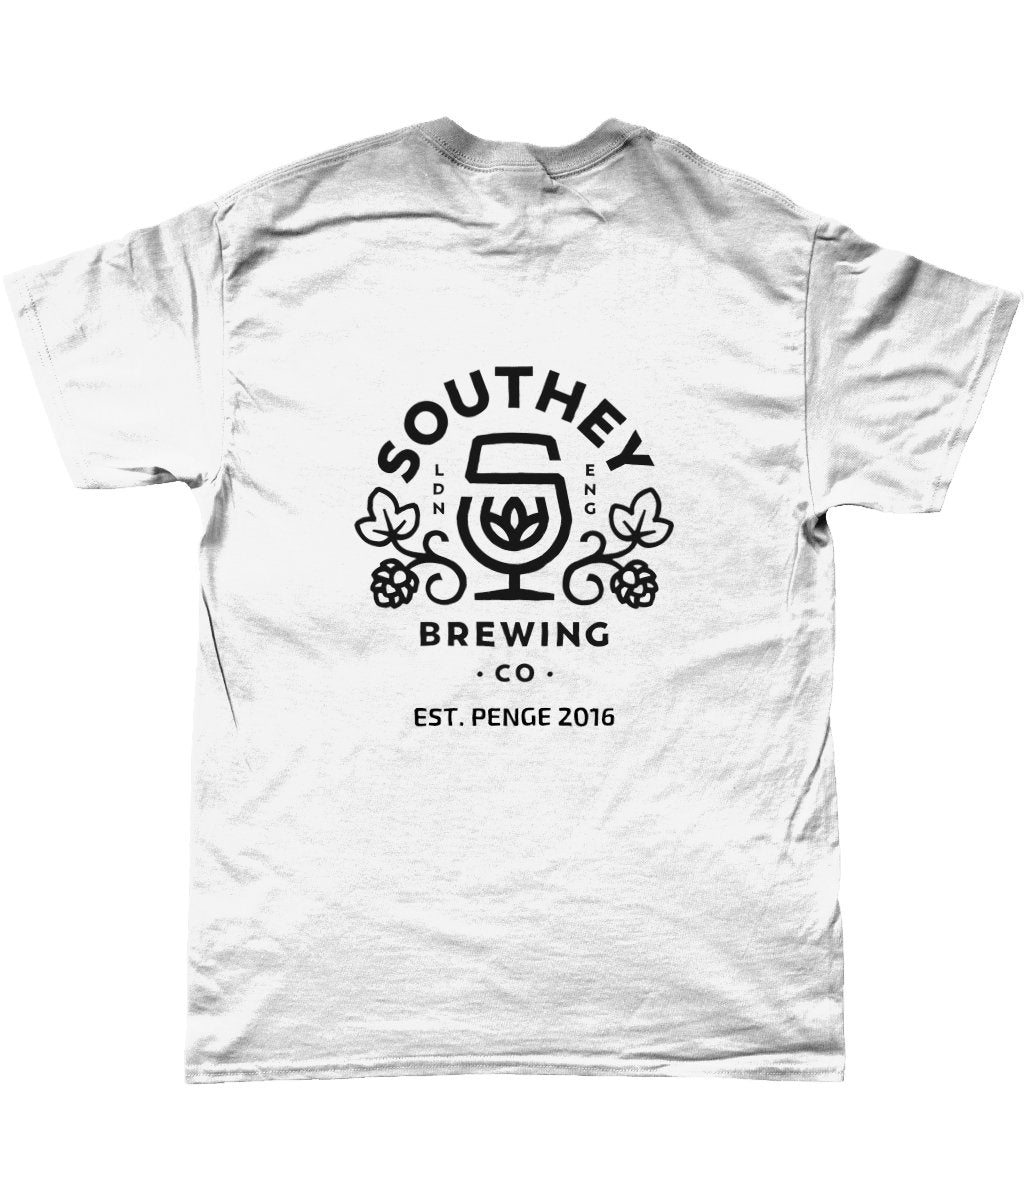 Original Southey T-Shirt (Black Logo) - Southey Brewery Co.